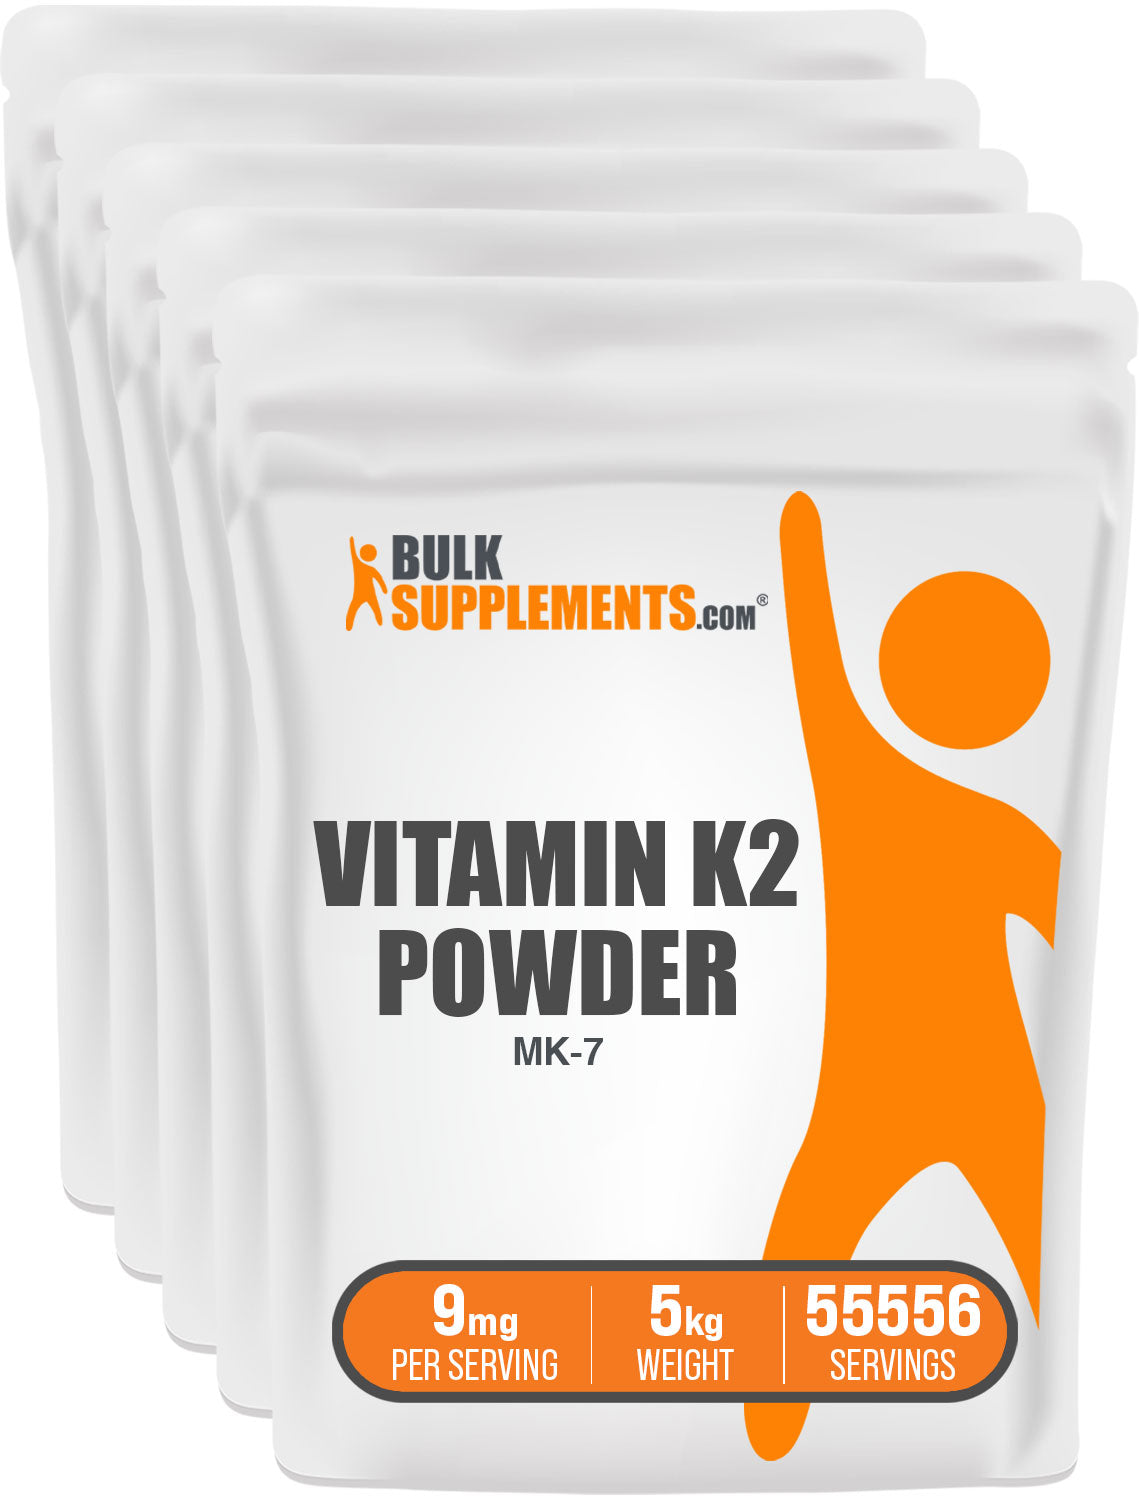 BulkSupplements Vitamin K2 Powder MK-7 5kg bag